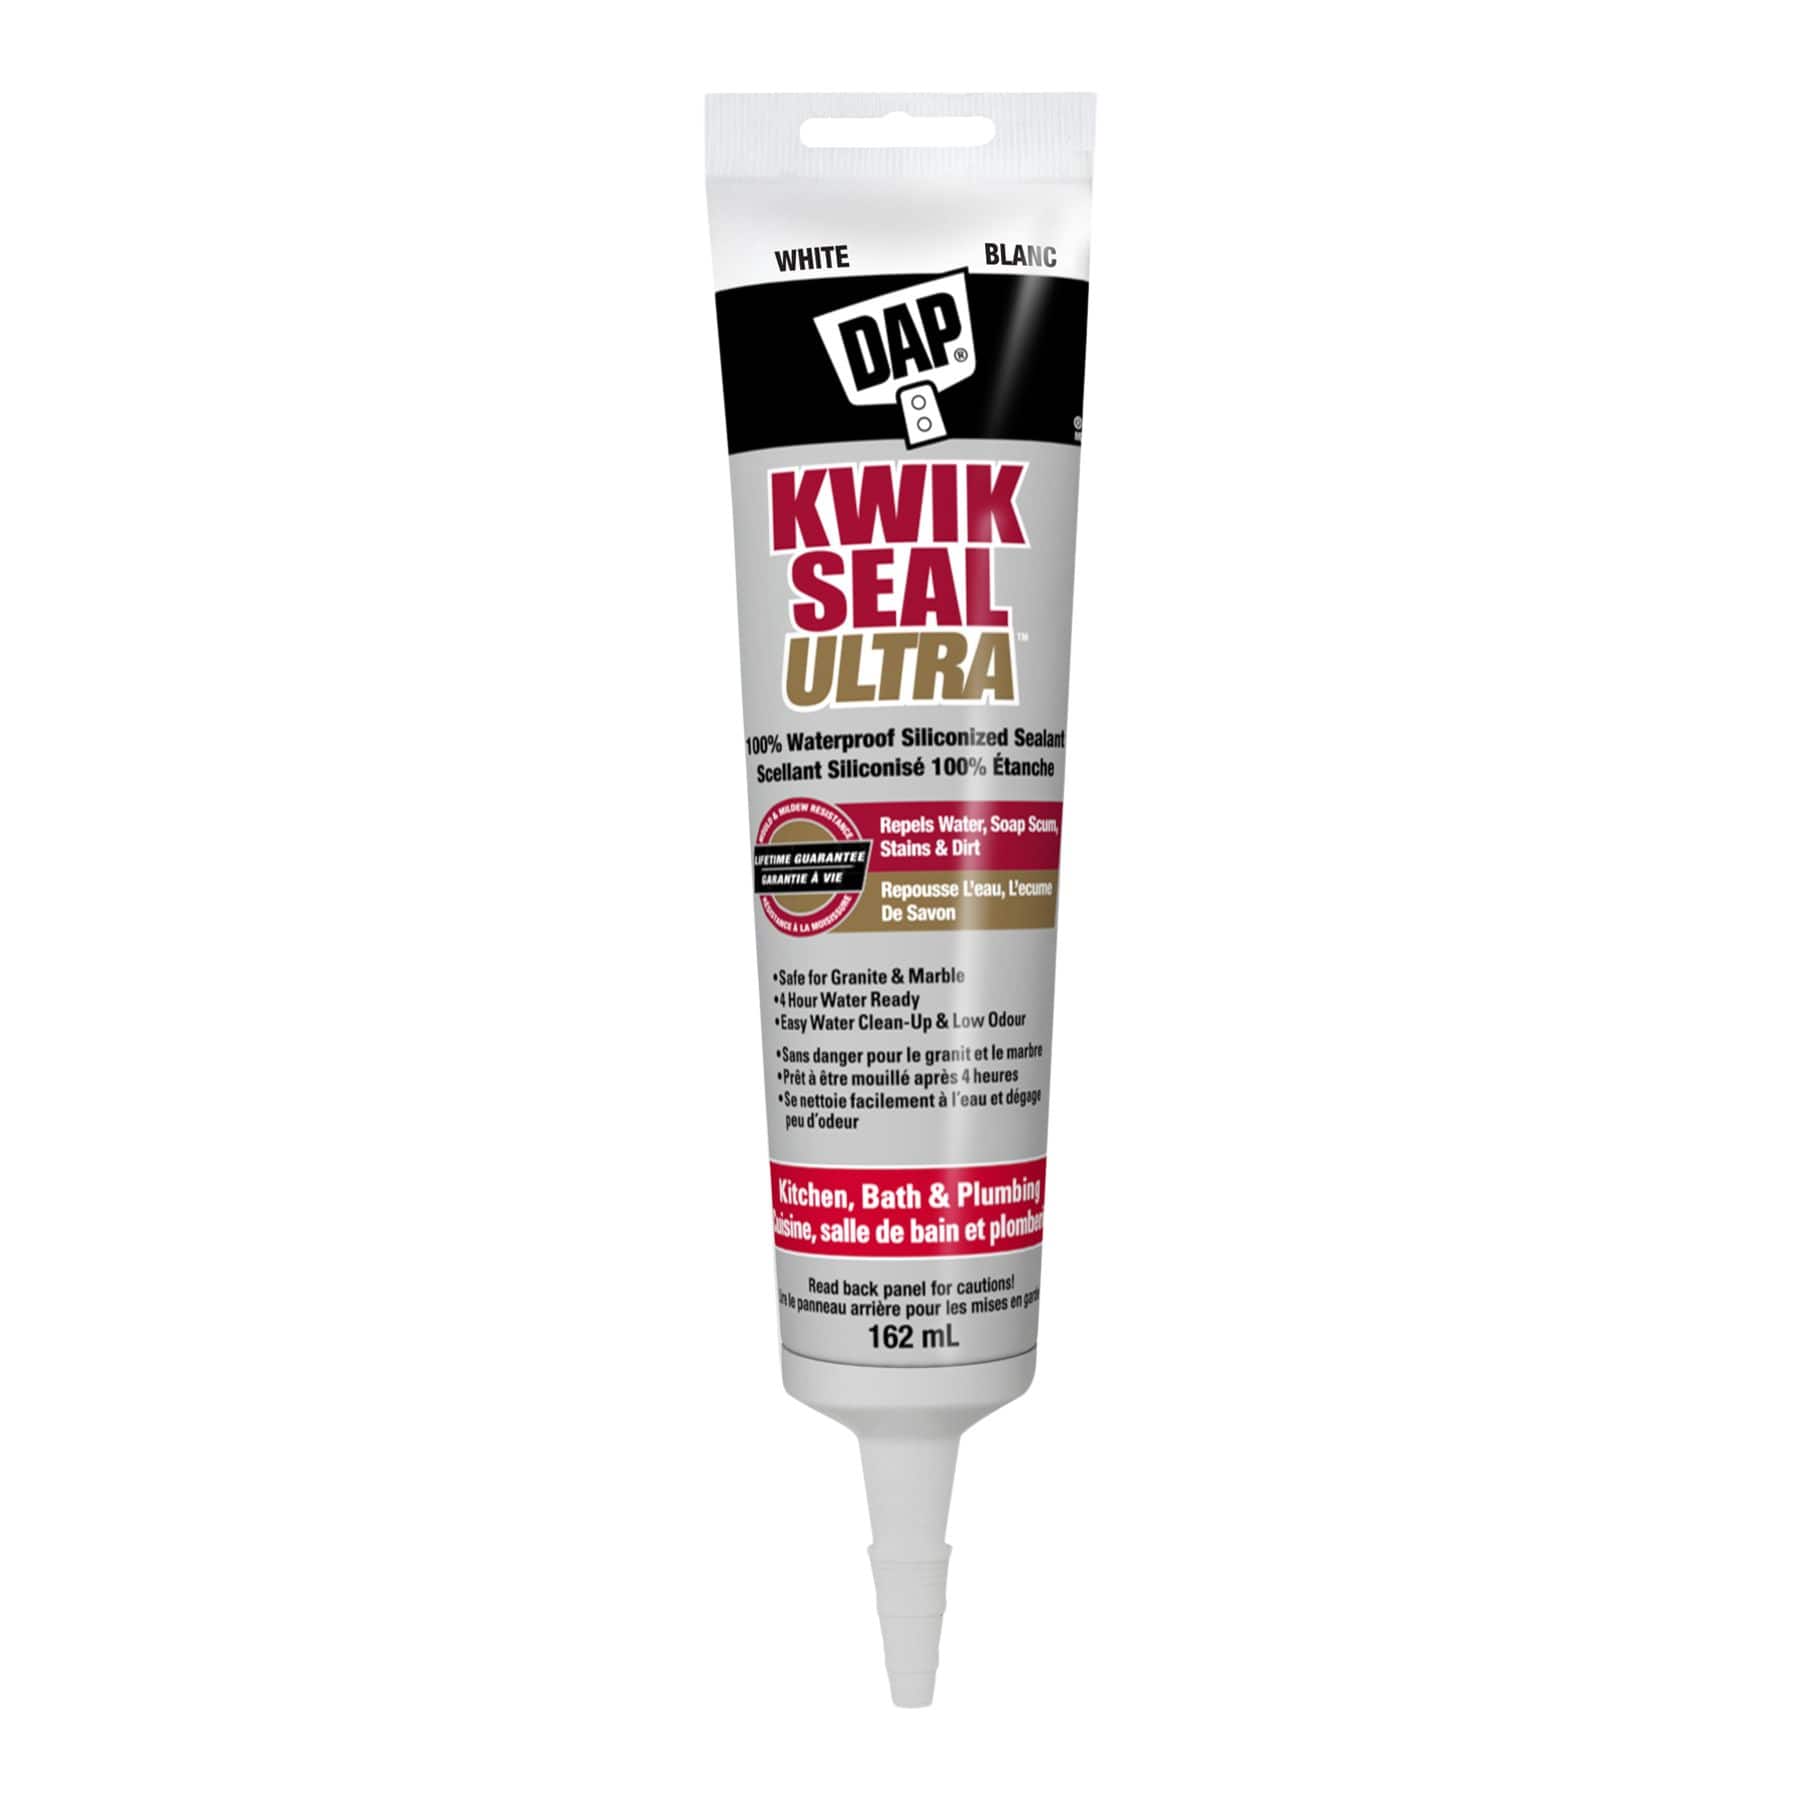 DAP Kwik Seal Ultra Kitchen, Bath & Plumbing Siliconized Sealant, White,  162-ml